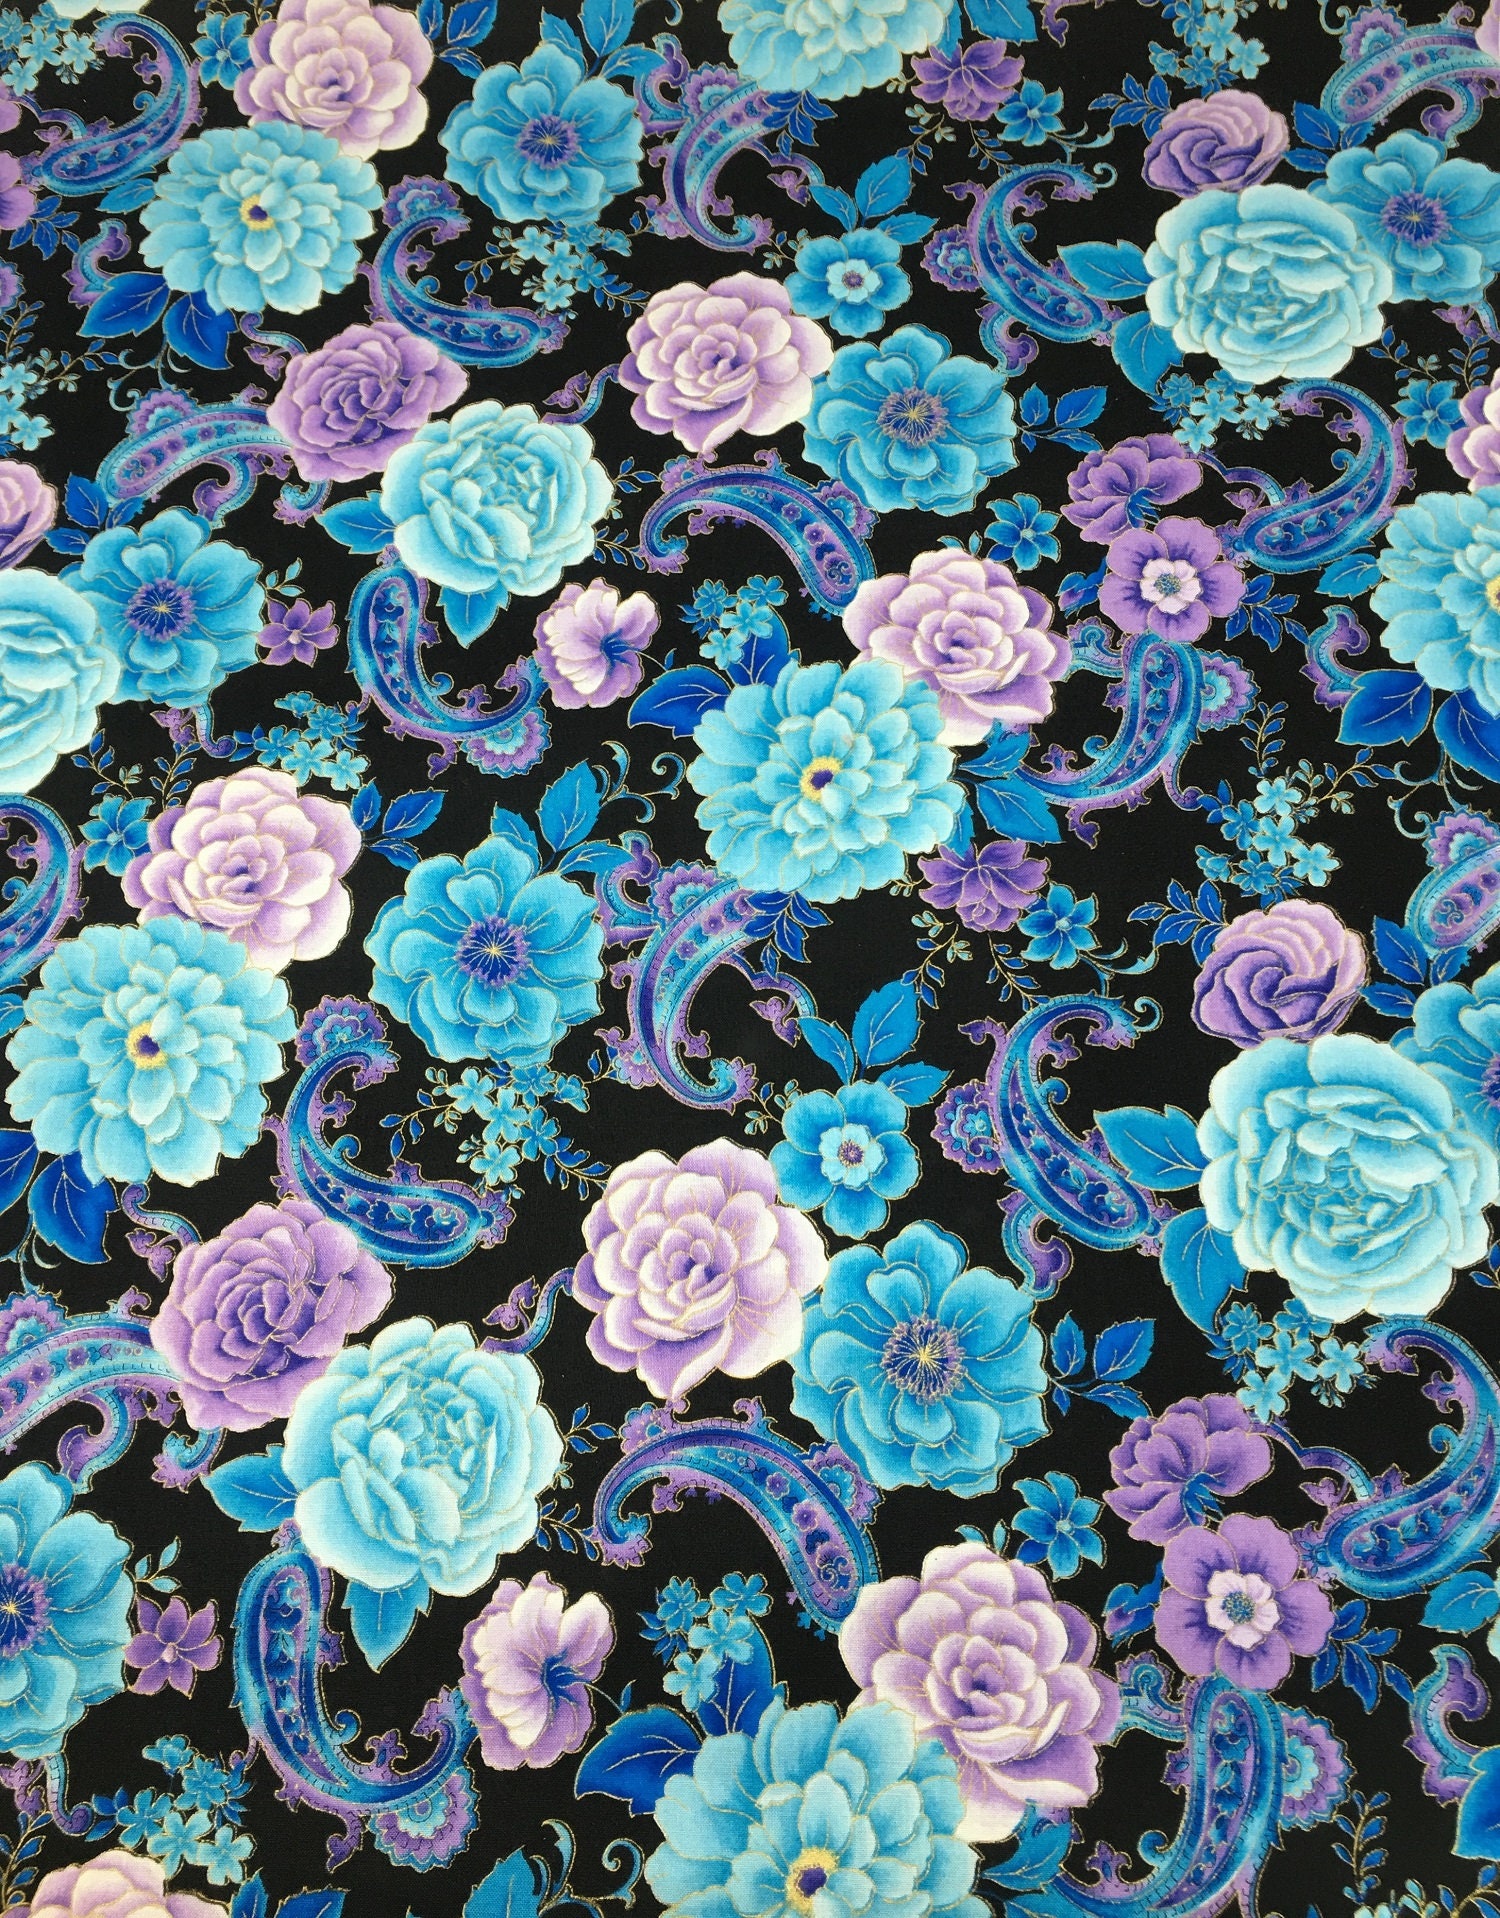 Blue and Purple Metallic Paisley Fabric by Hi-fashion Fabrics